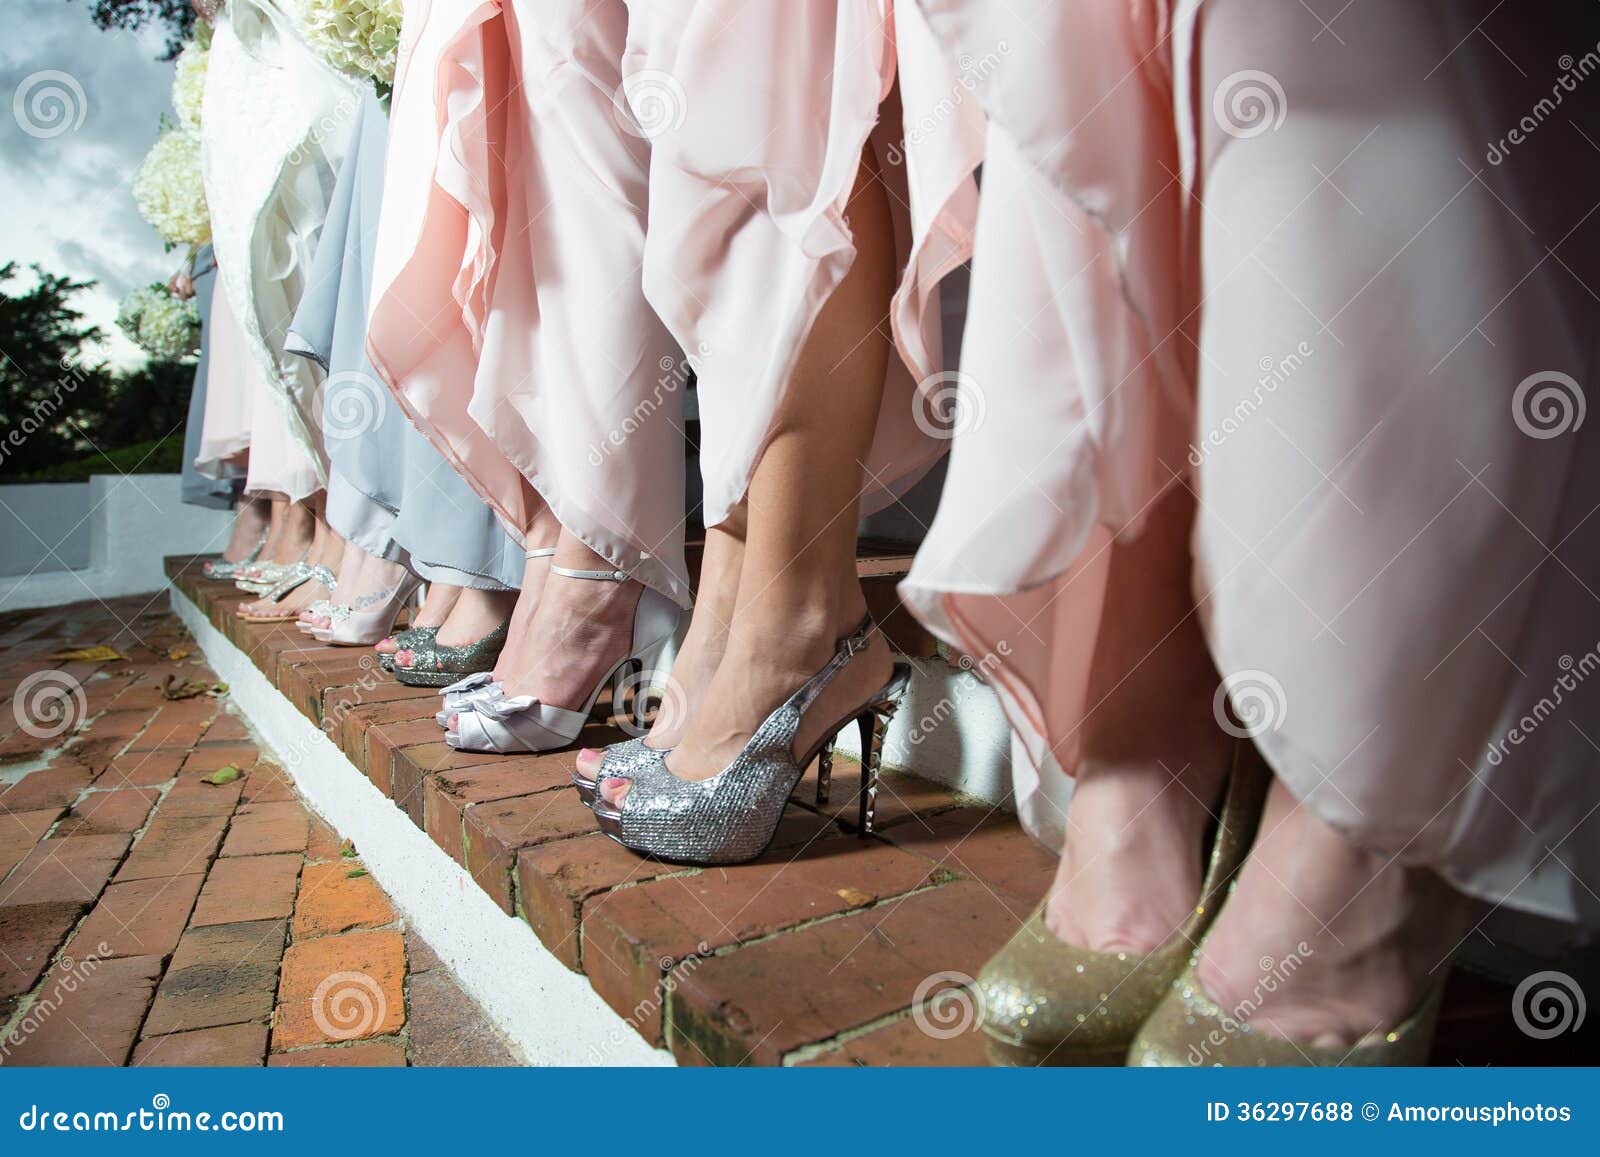 row of bridesmaids in dresses